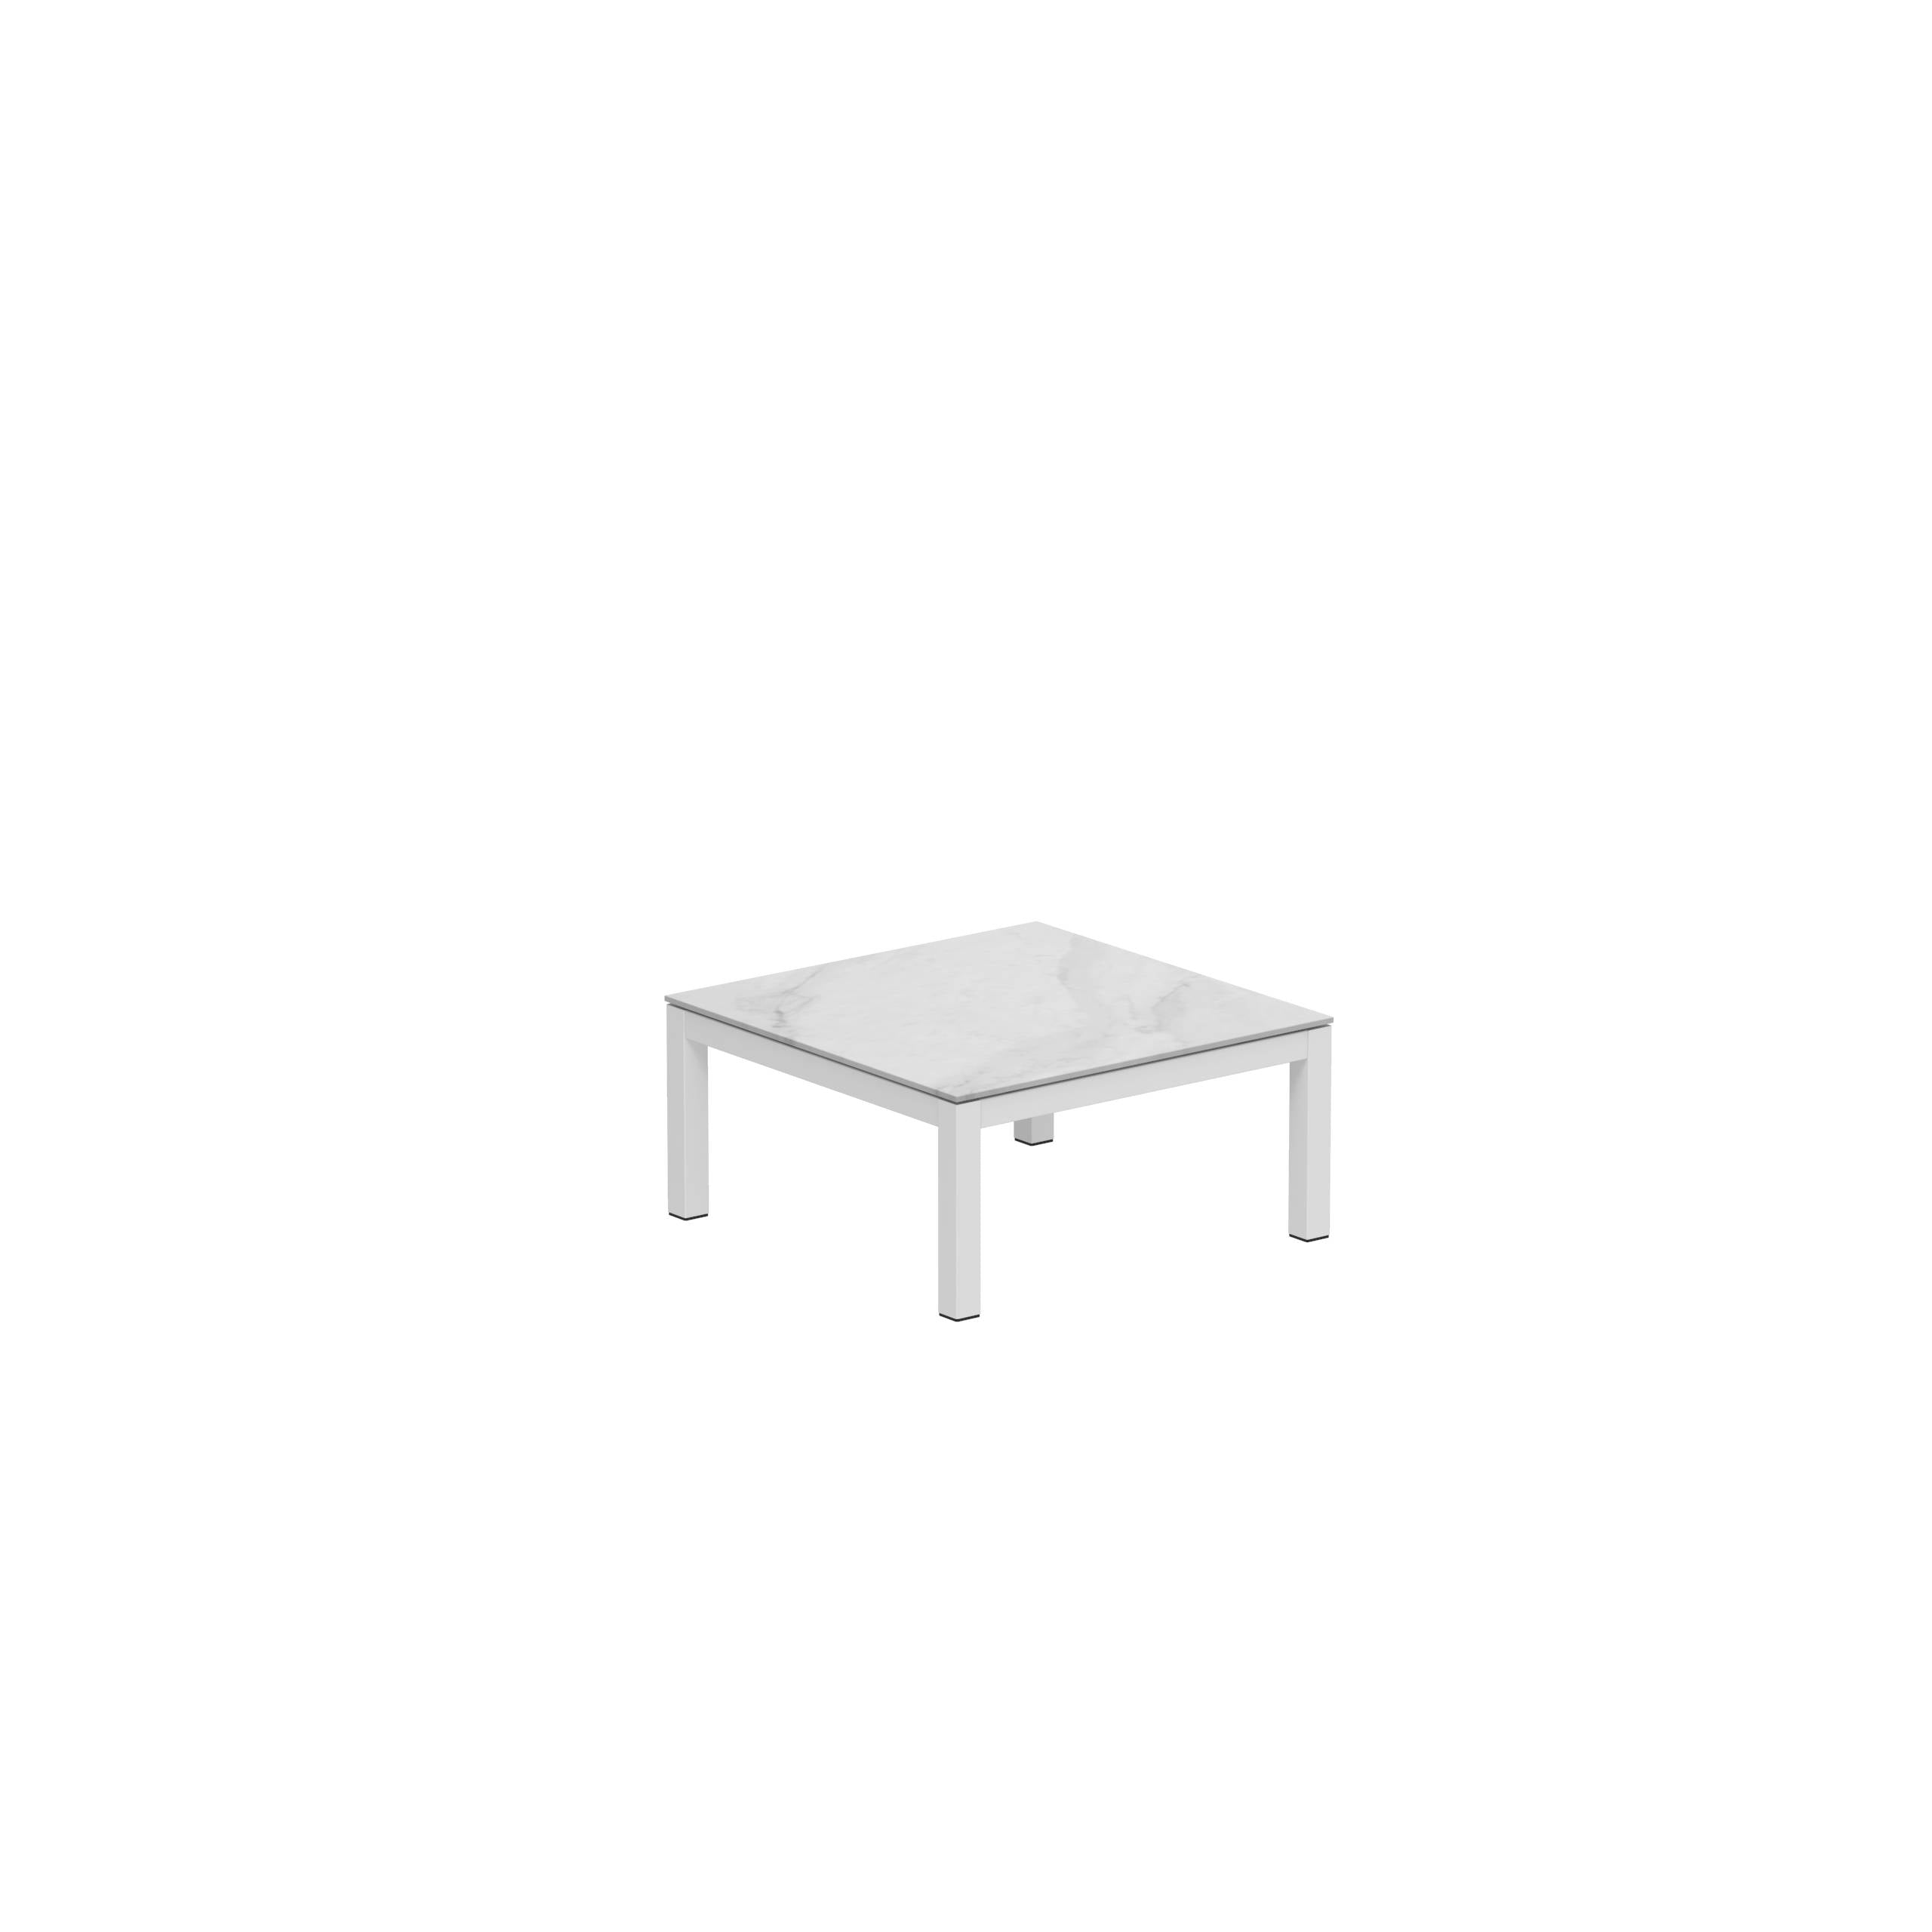 Taboela Low Table 80x80cm White + Ceramic Top Bianco Statuario